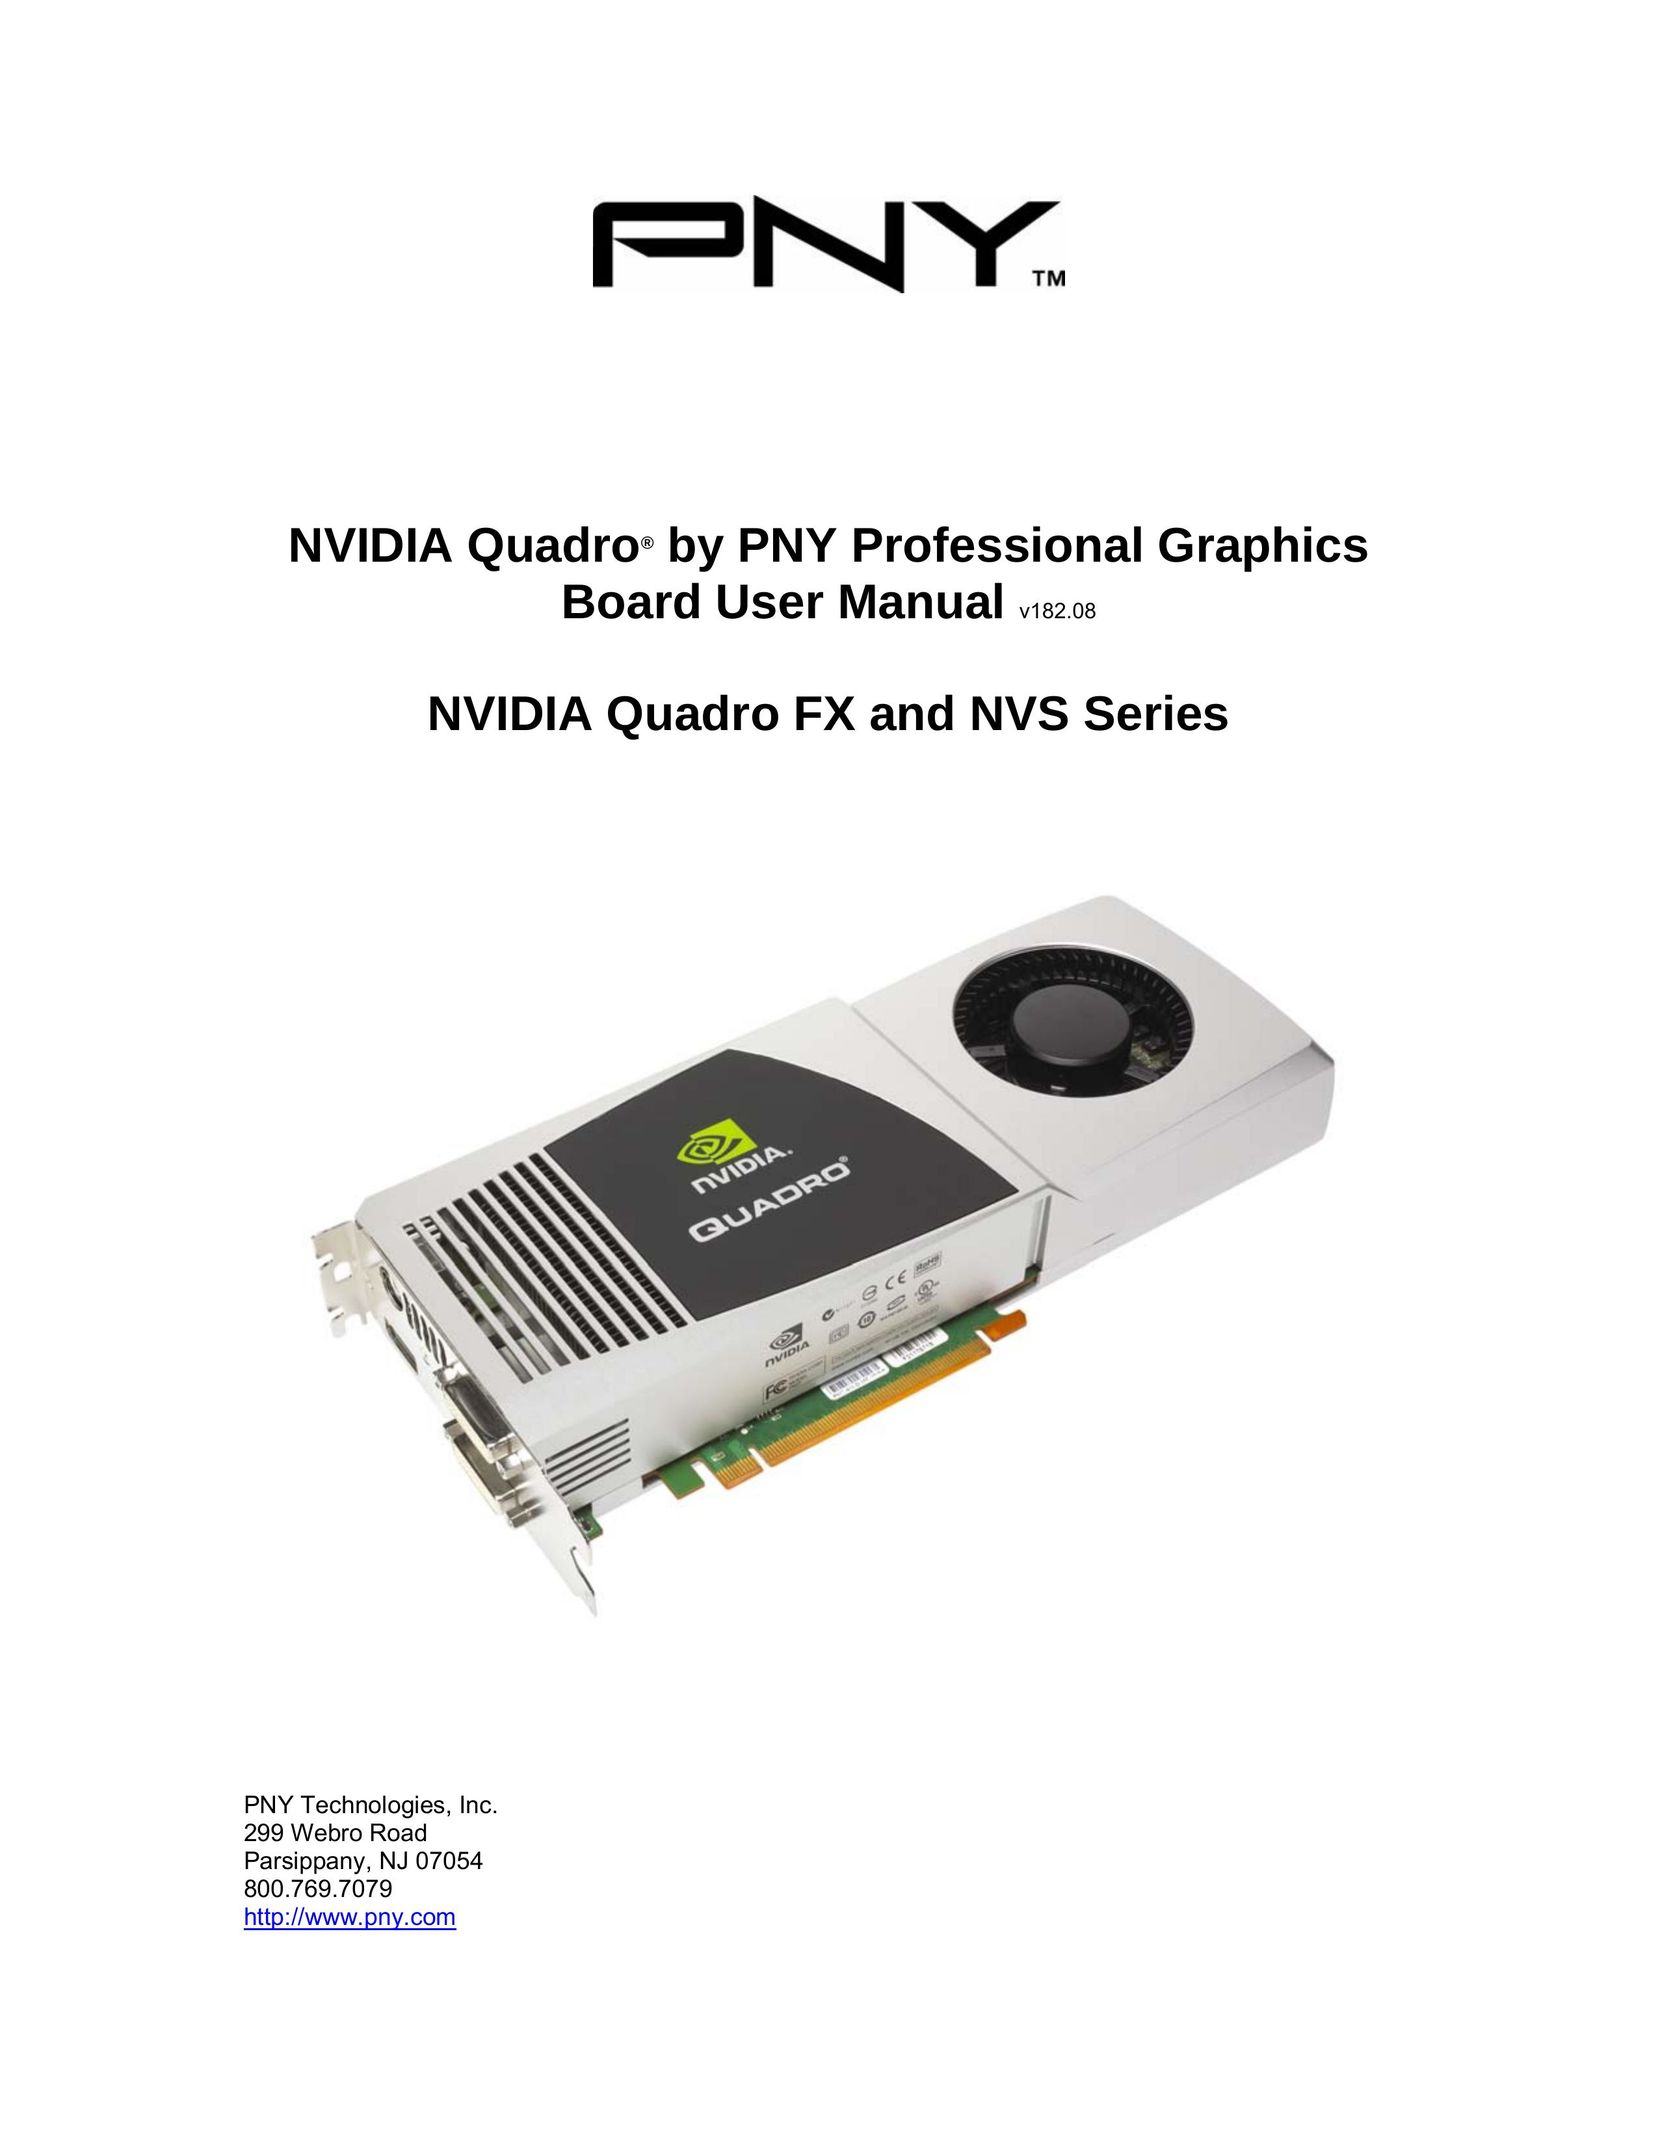 PNY FX 370 LP Computer Hardware User Manual